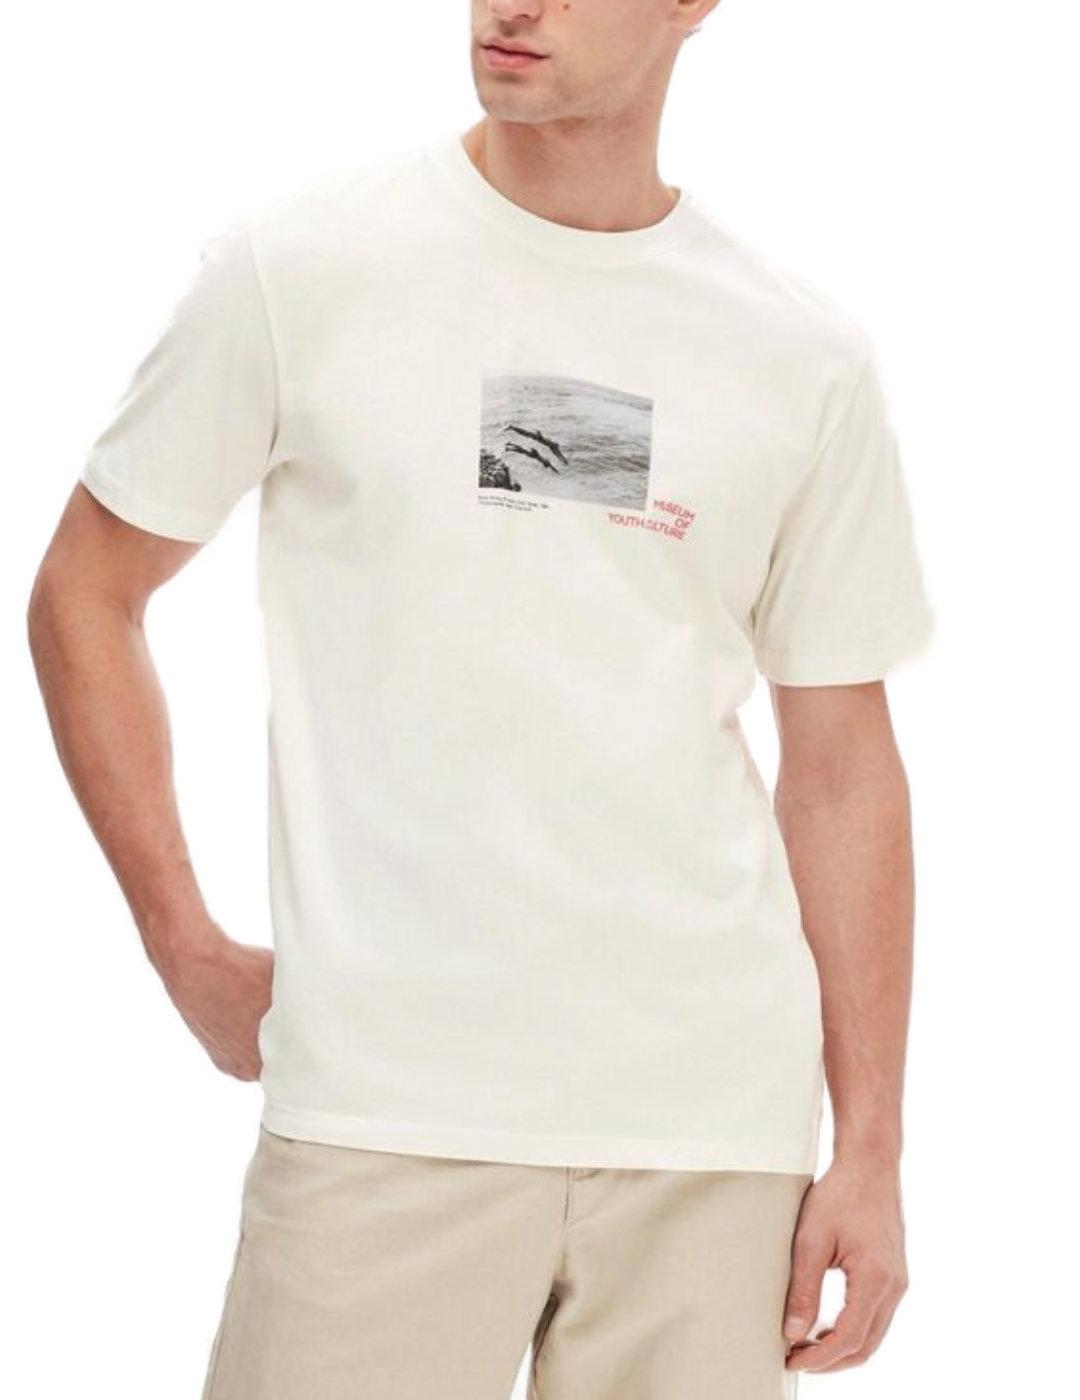 Camiseta Selected Gaz blanco roto manga corta para hombre